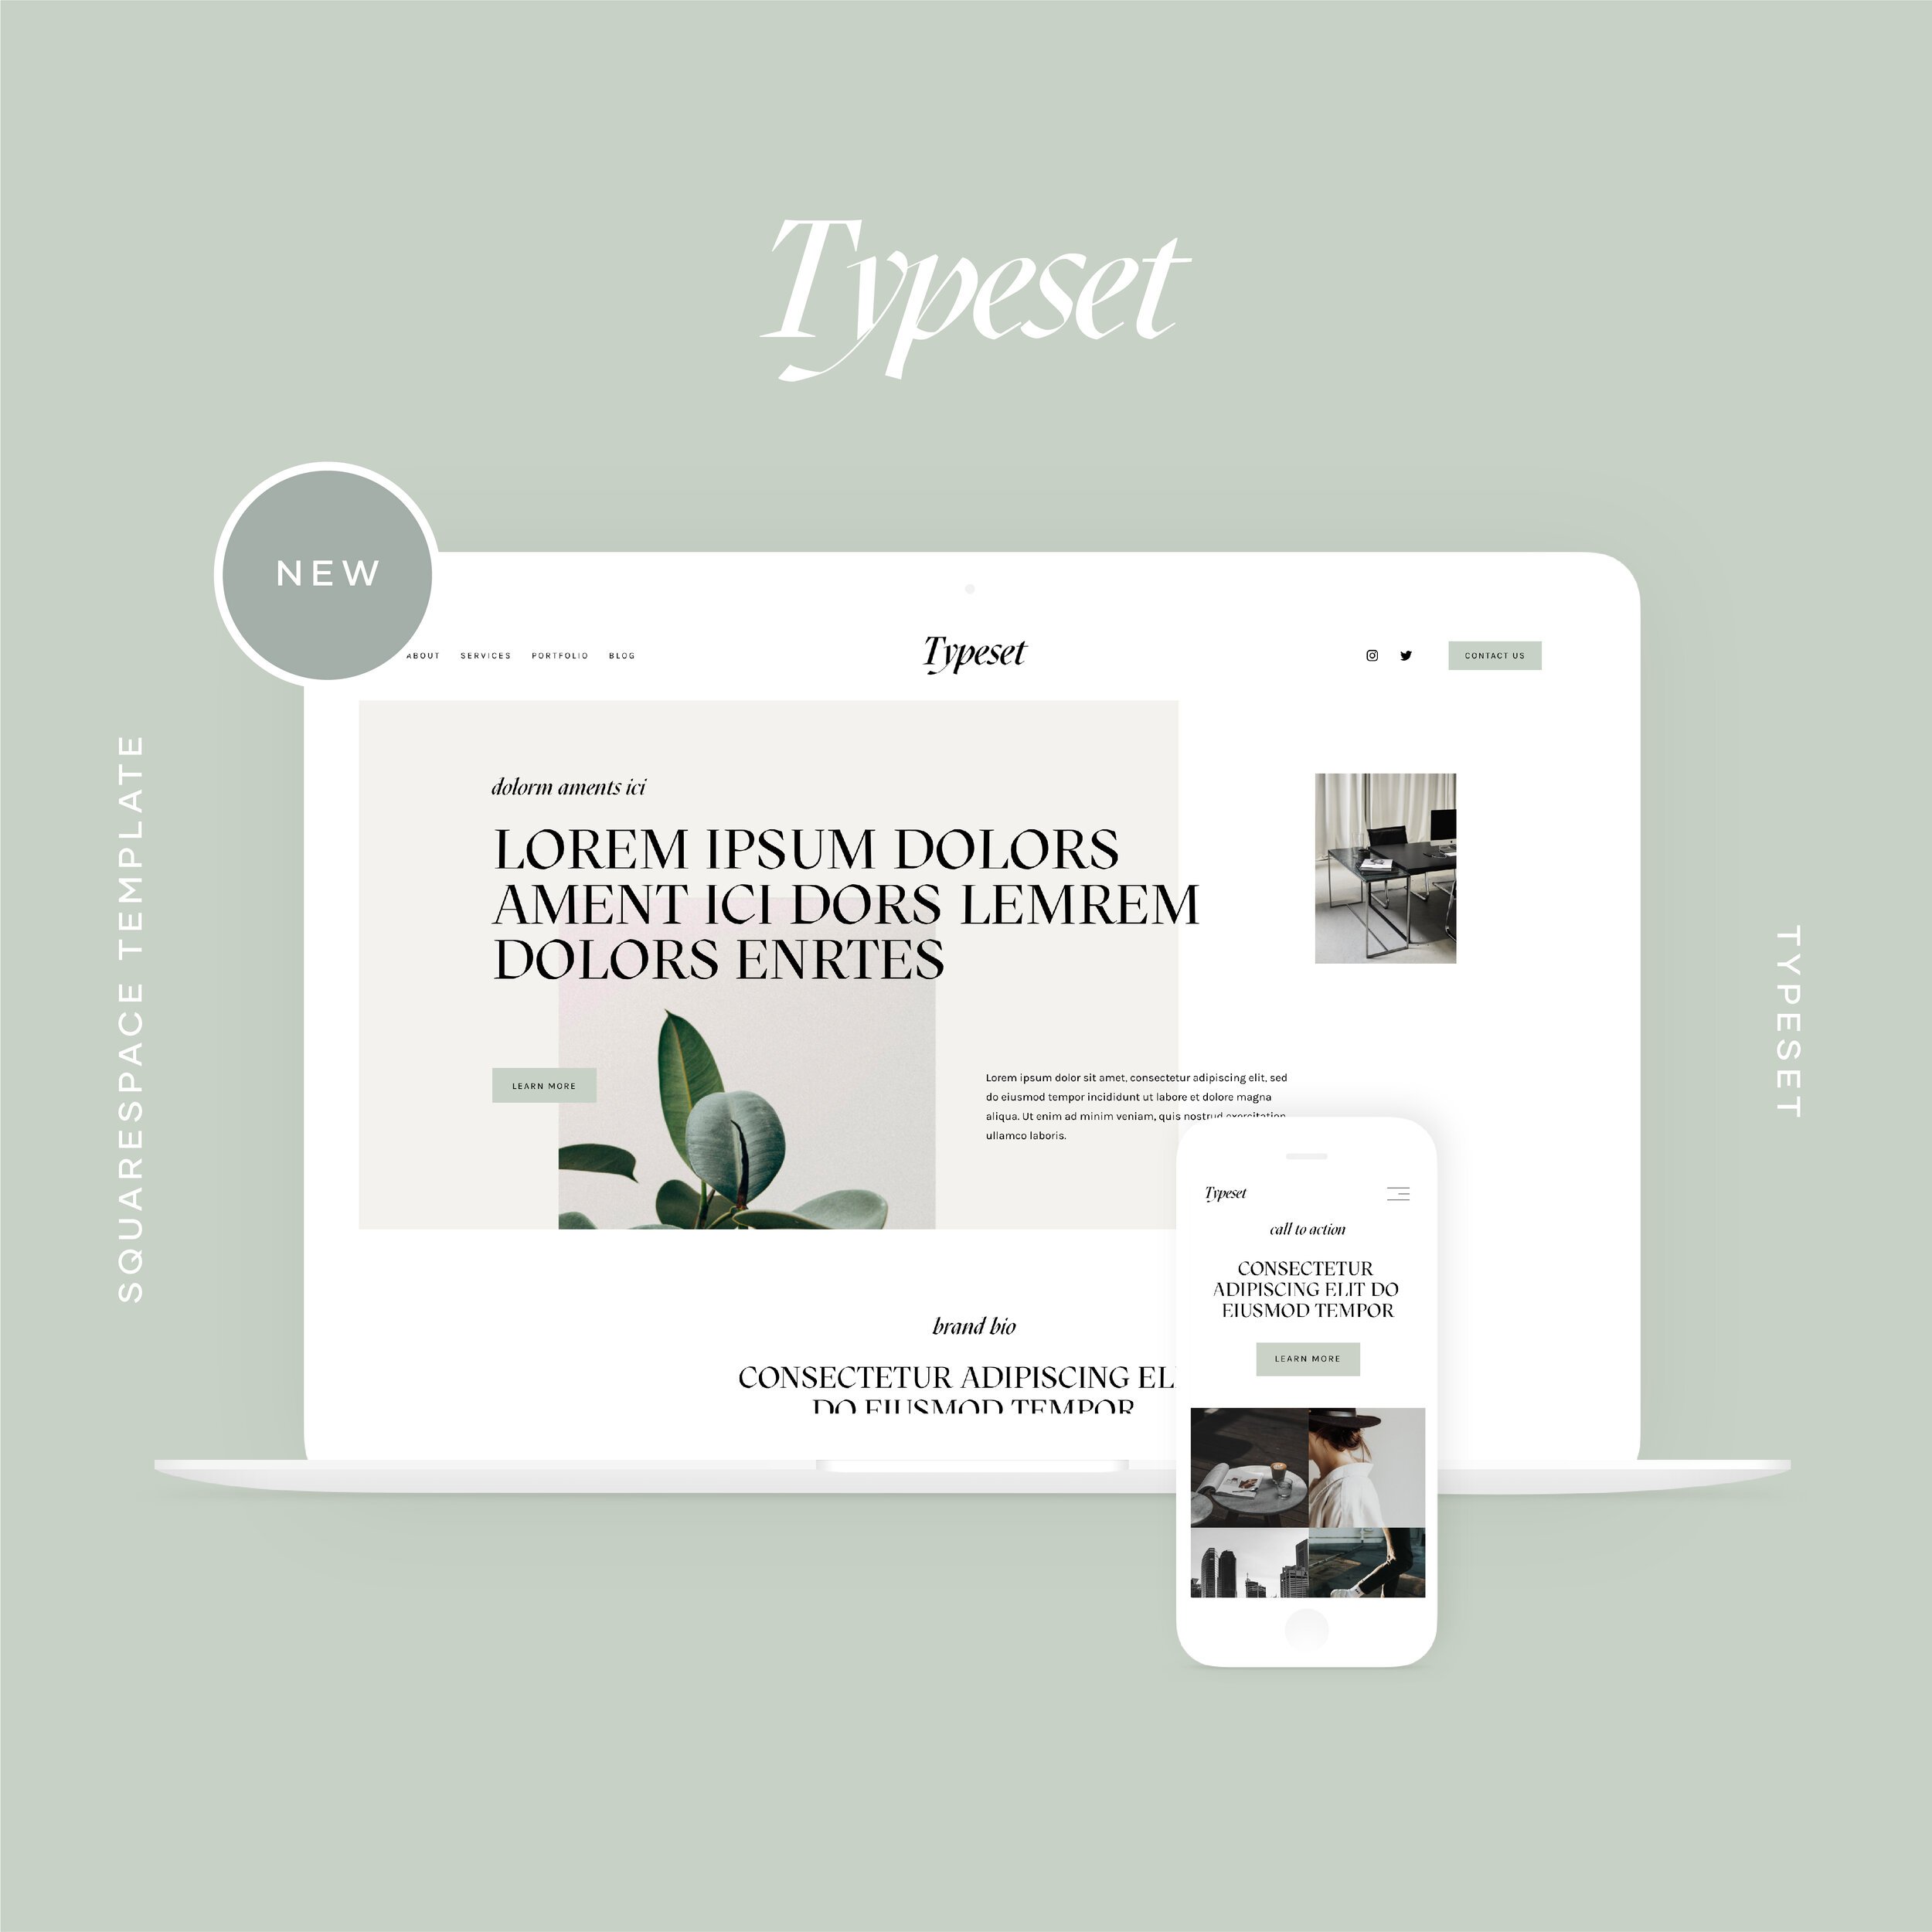 Typeset-launchgraphics_Instagram Giveaway V2.jpg